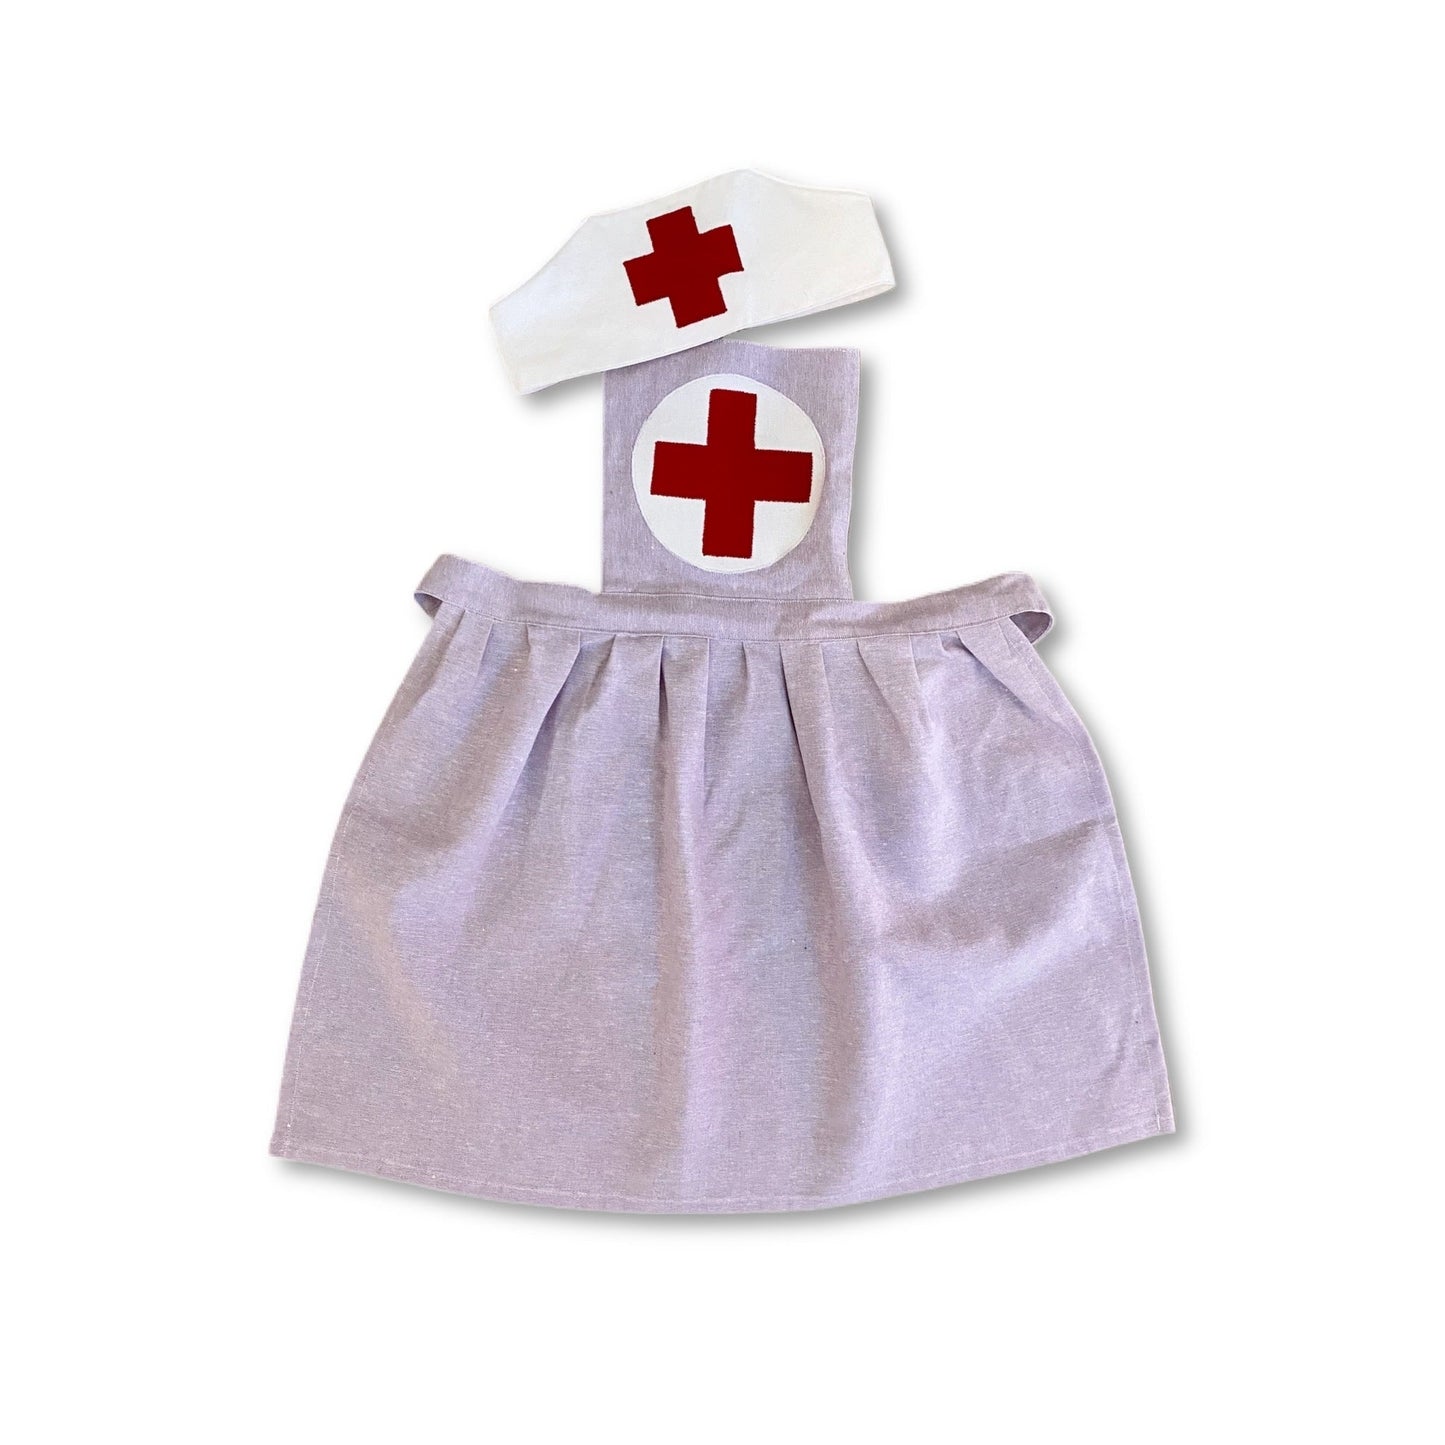 Lilac nurse apron costume for kids dress up doctor games.